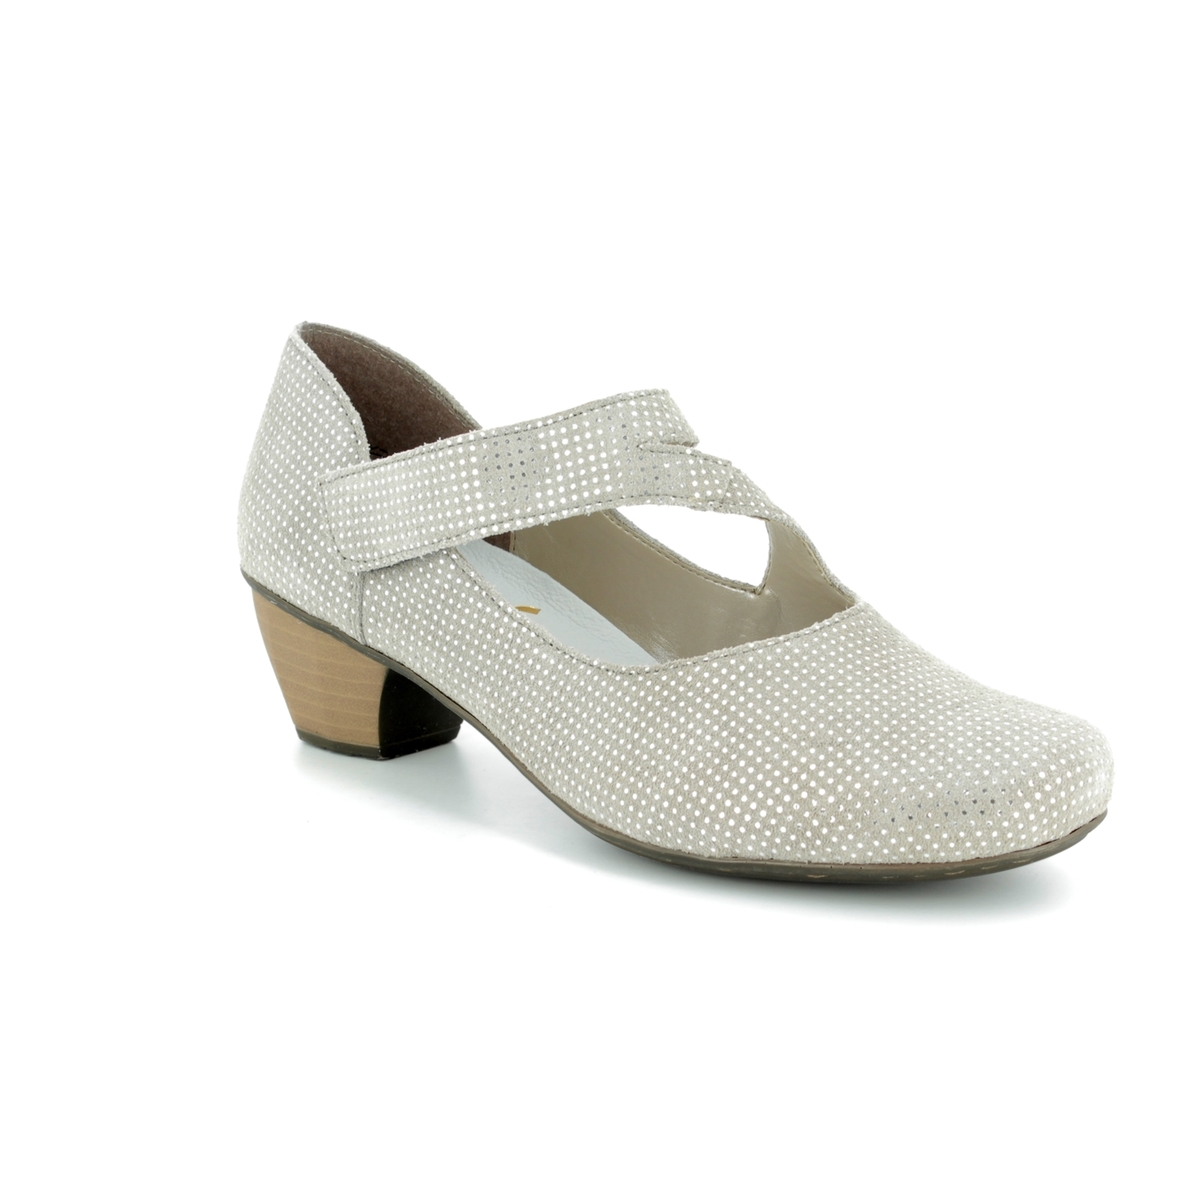 Rieker 41793-42 Light taupe heeled shoes